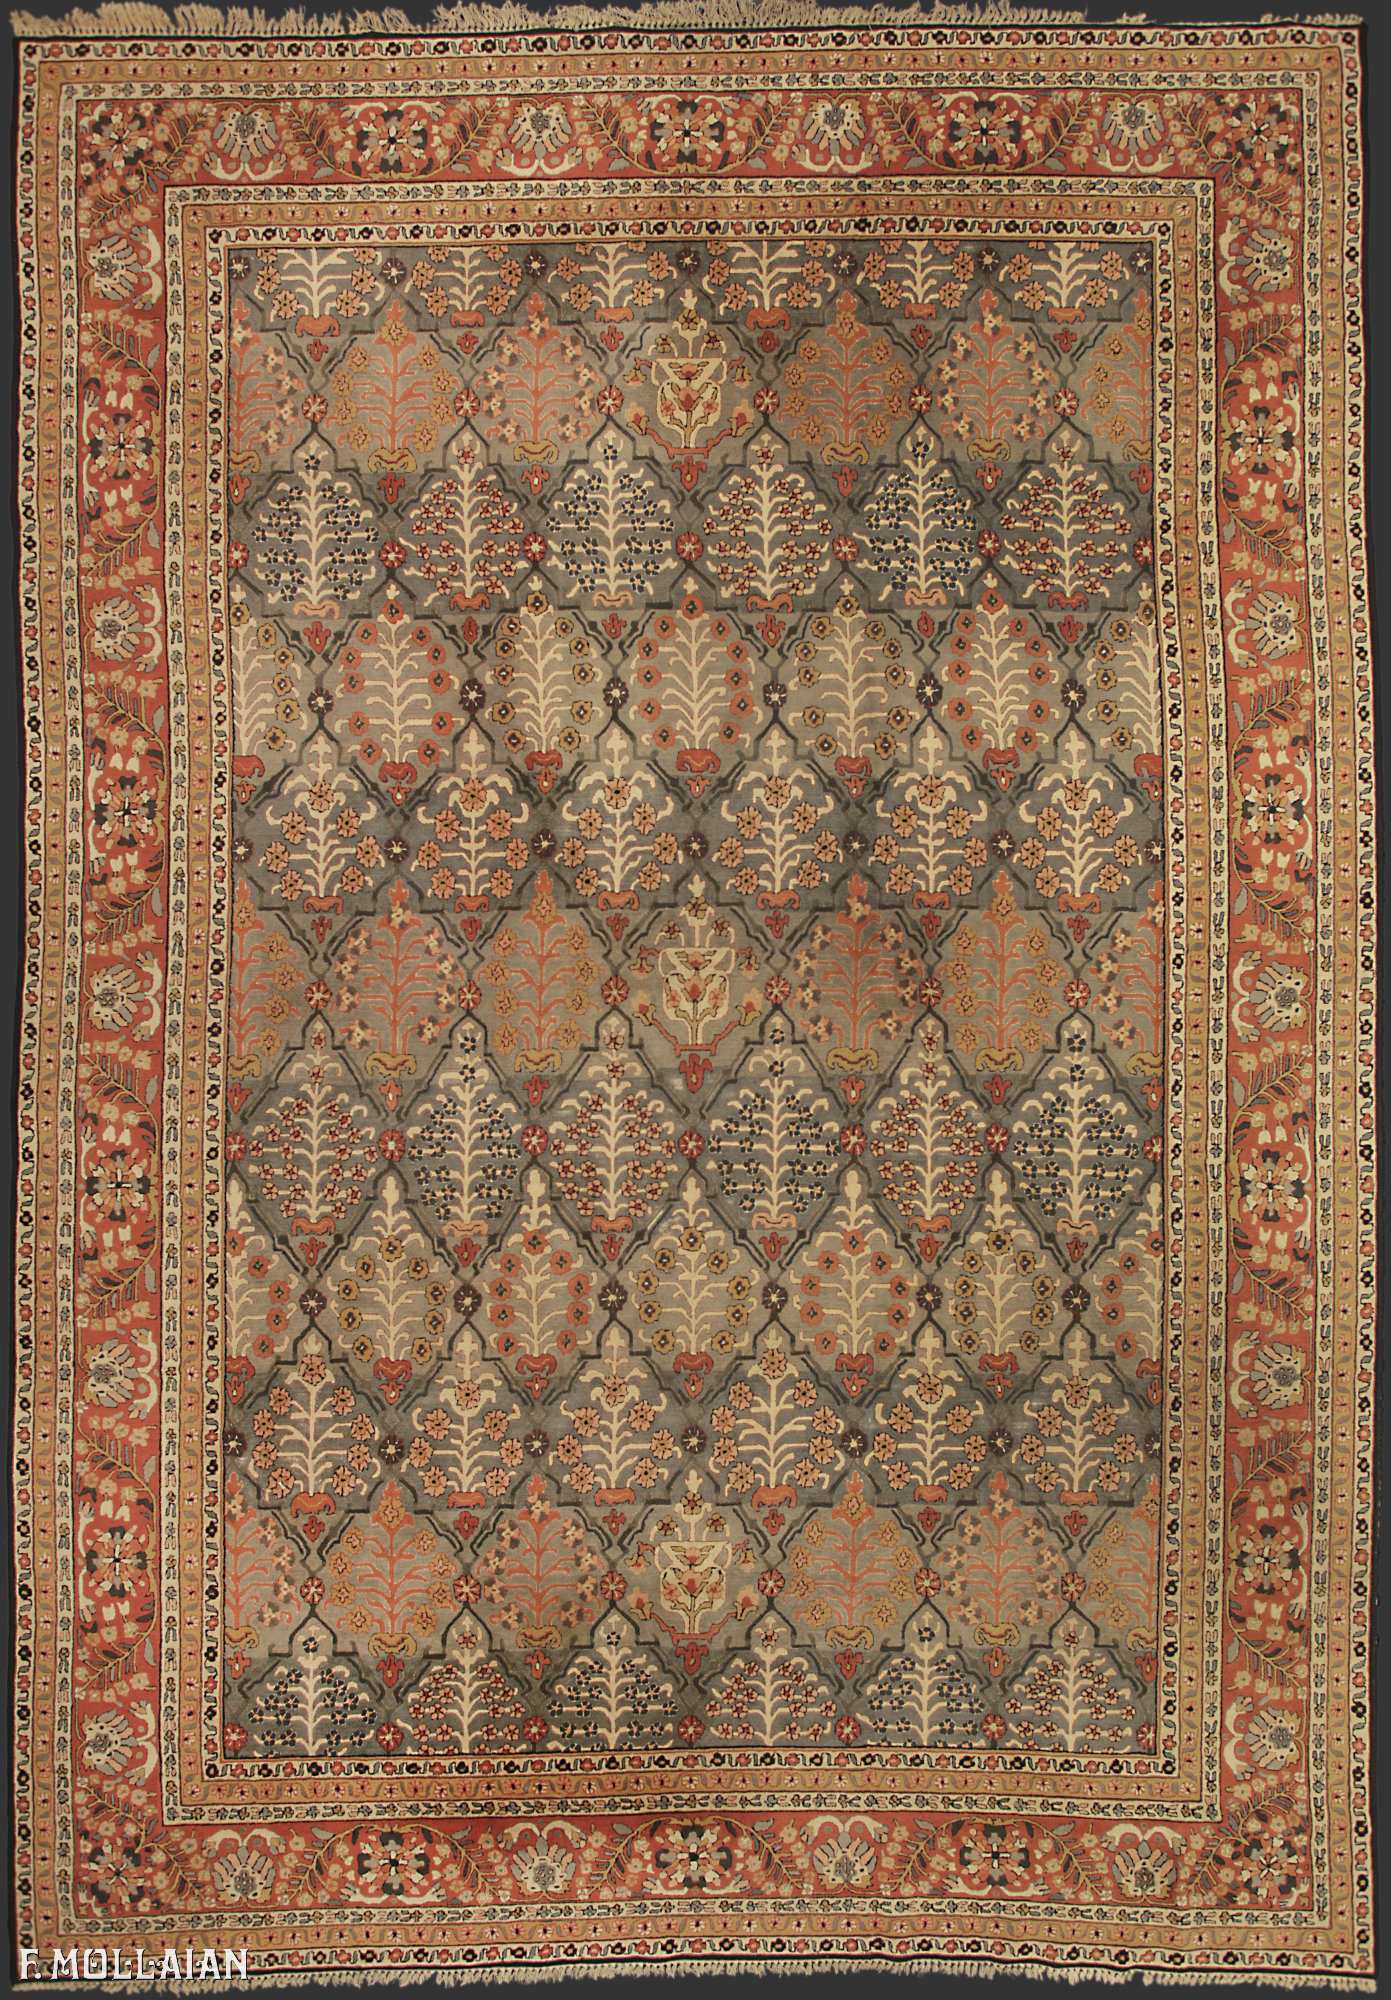 Semi-Antique German Tetex Carpet n°:95930021